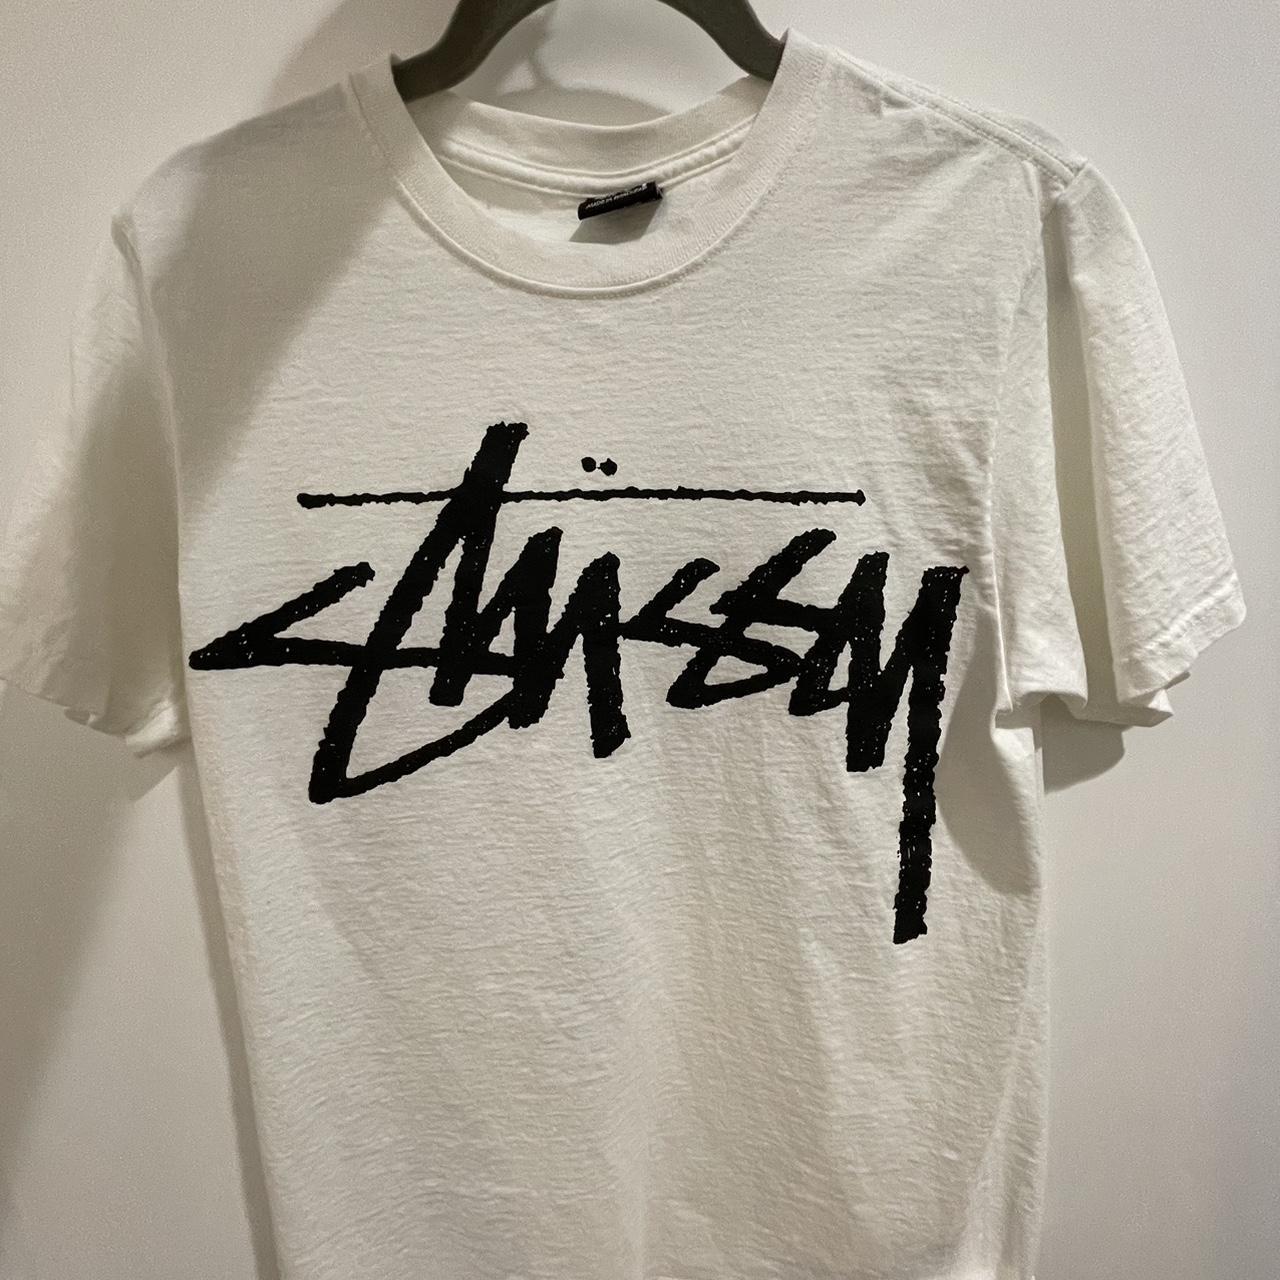 White Stussy logo shirt male size small - Depop